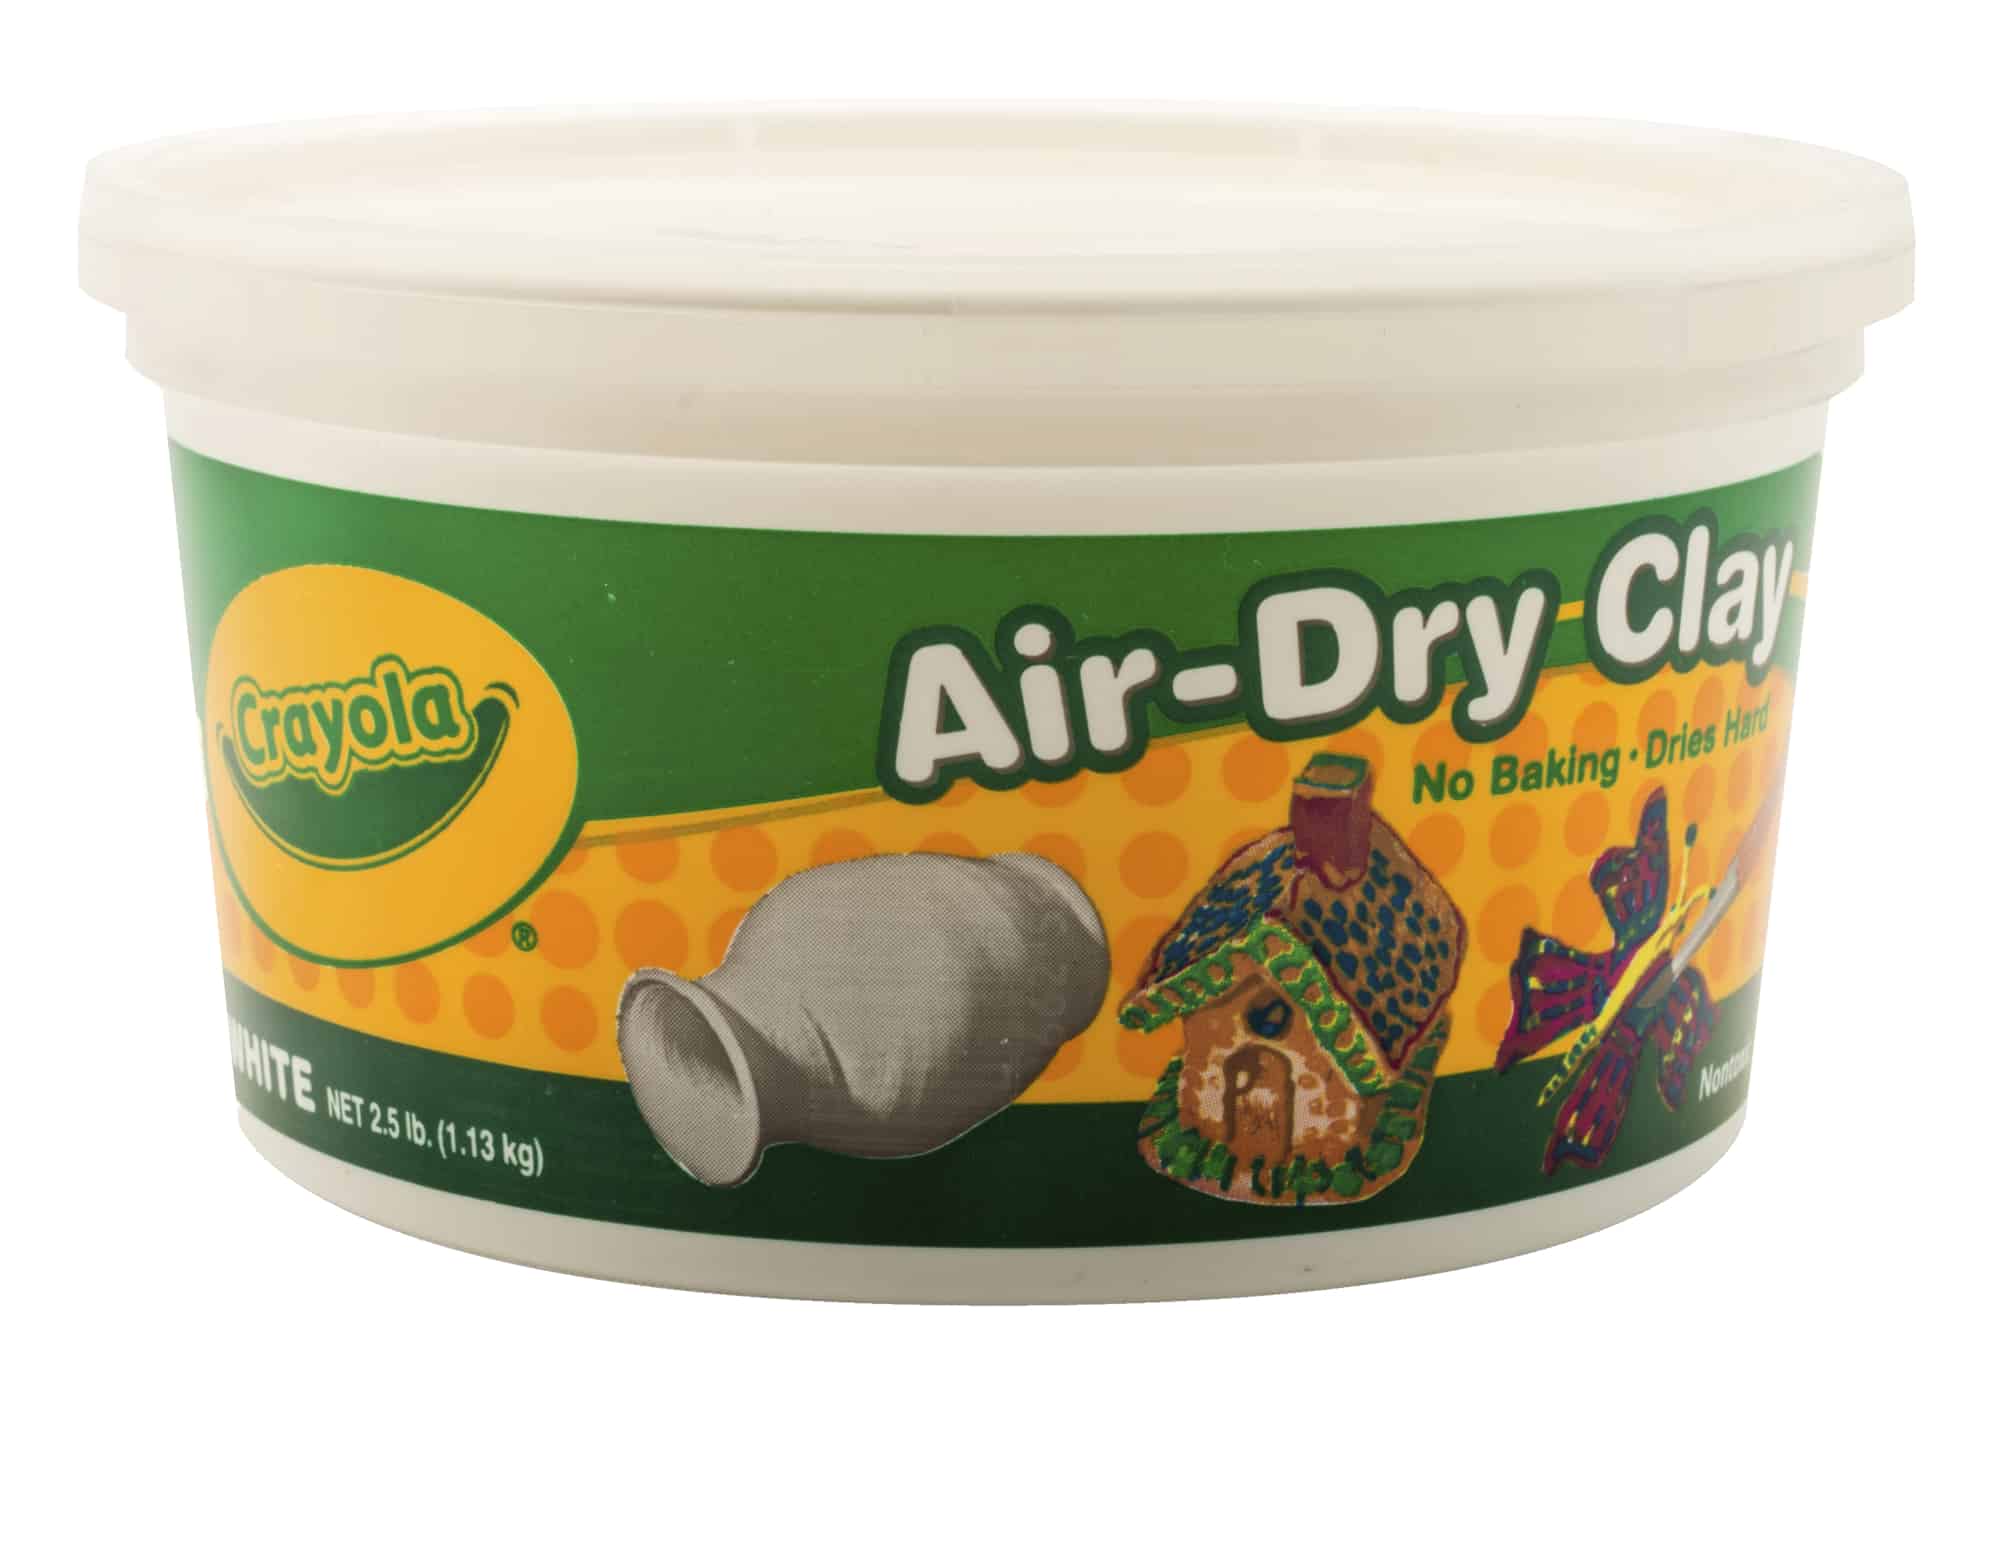 Crayola Air-Dry Clay, White, 2.5 Lb Resealable Bucket $2.99 {Reg $6.40}